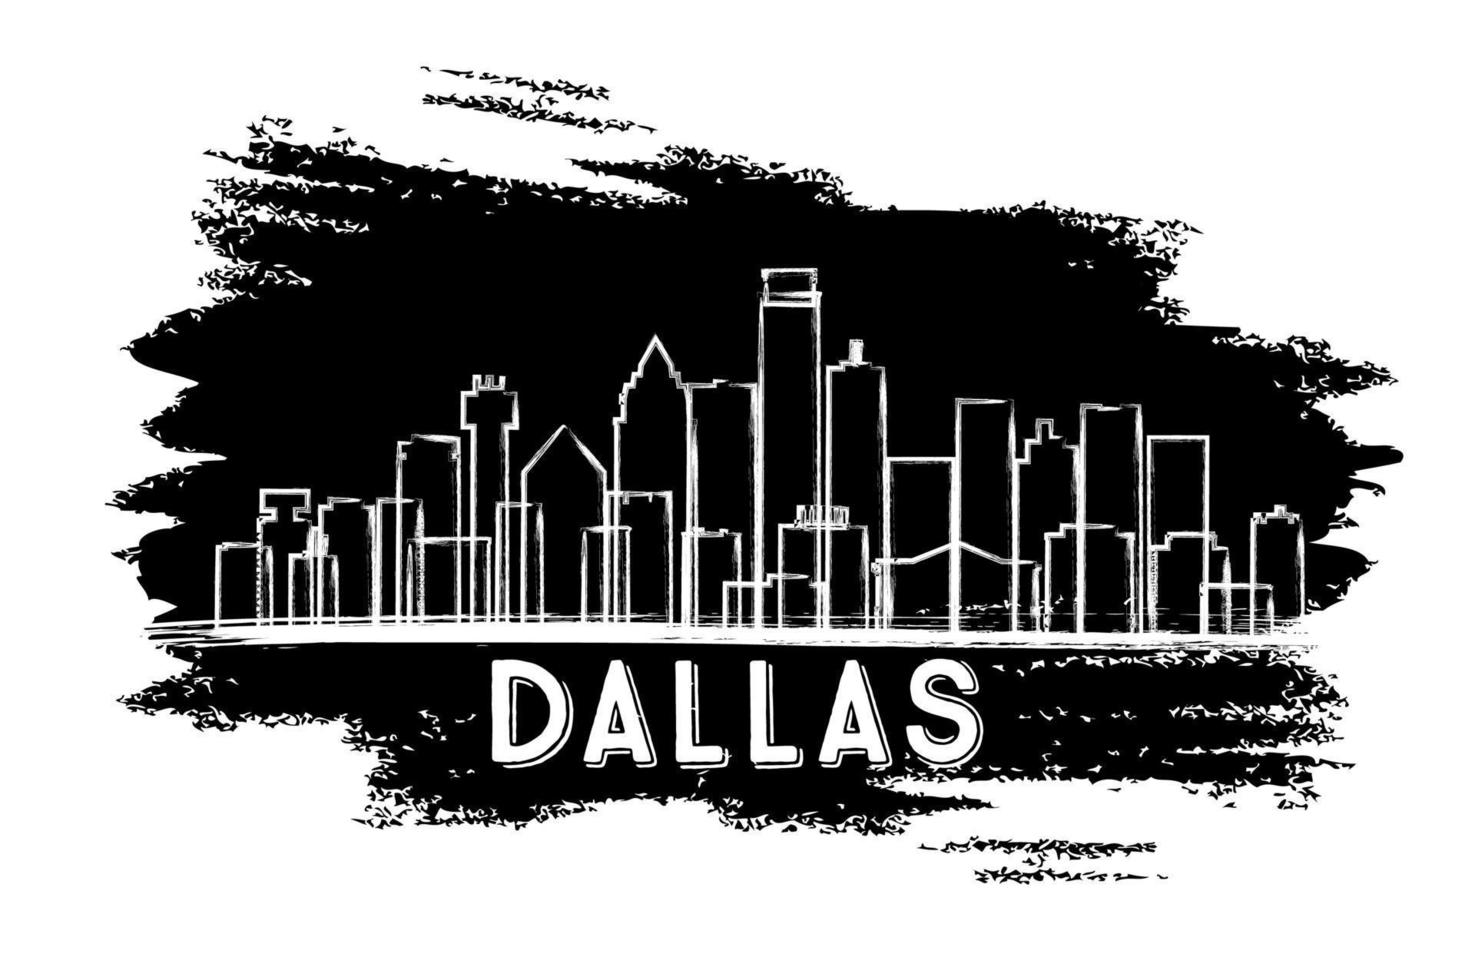 Dallas Texas Verenigde Staten van Amerika stad horizon silhouet. vector